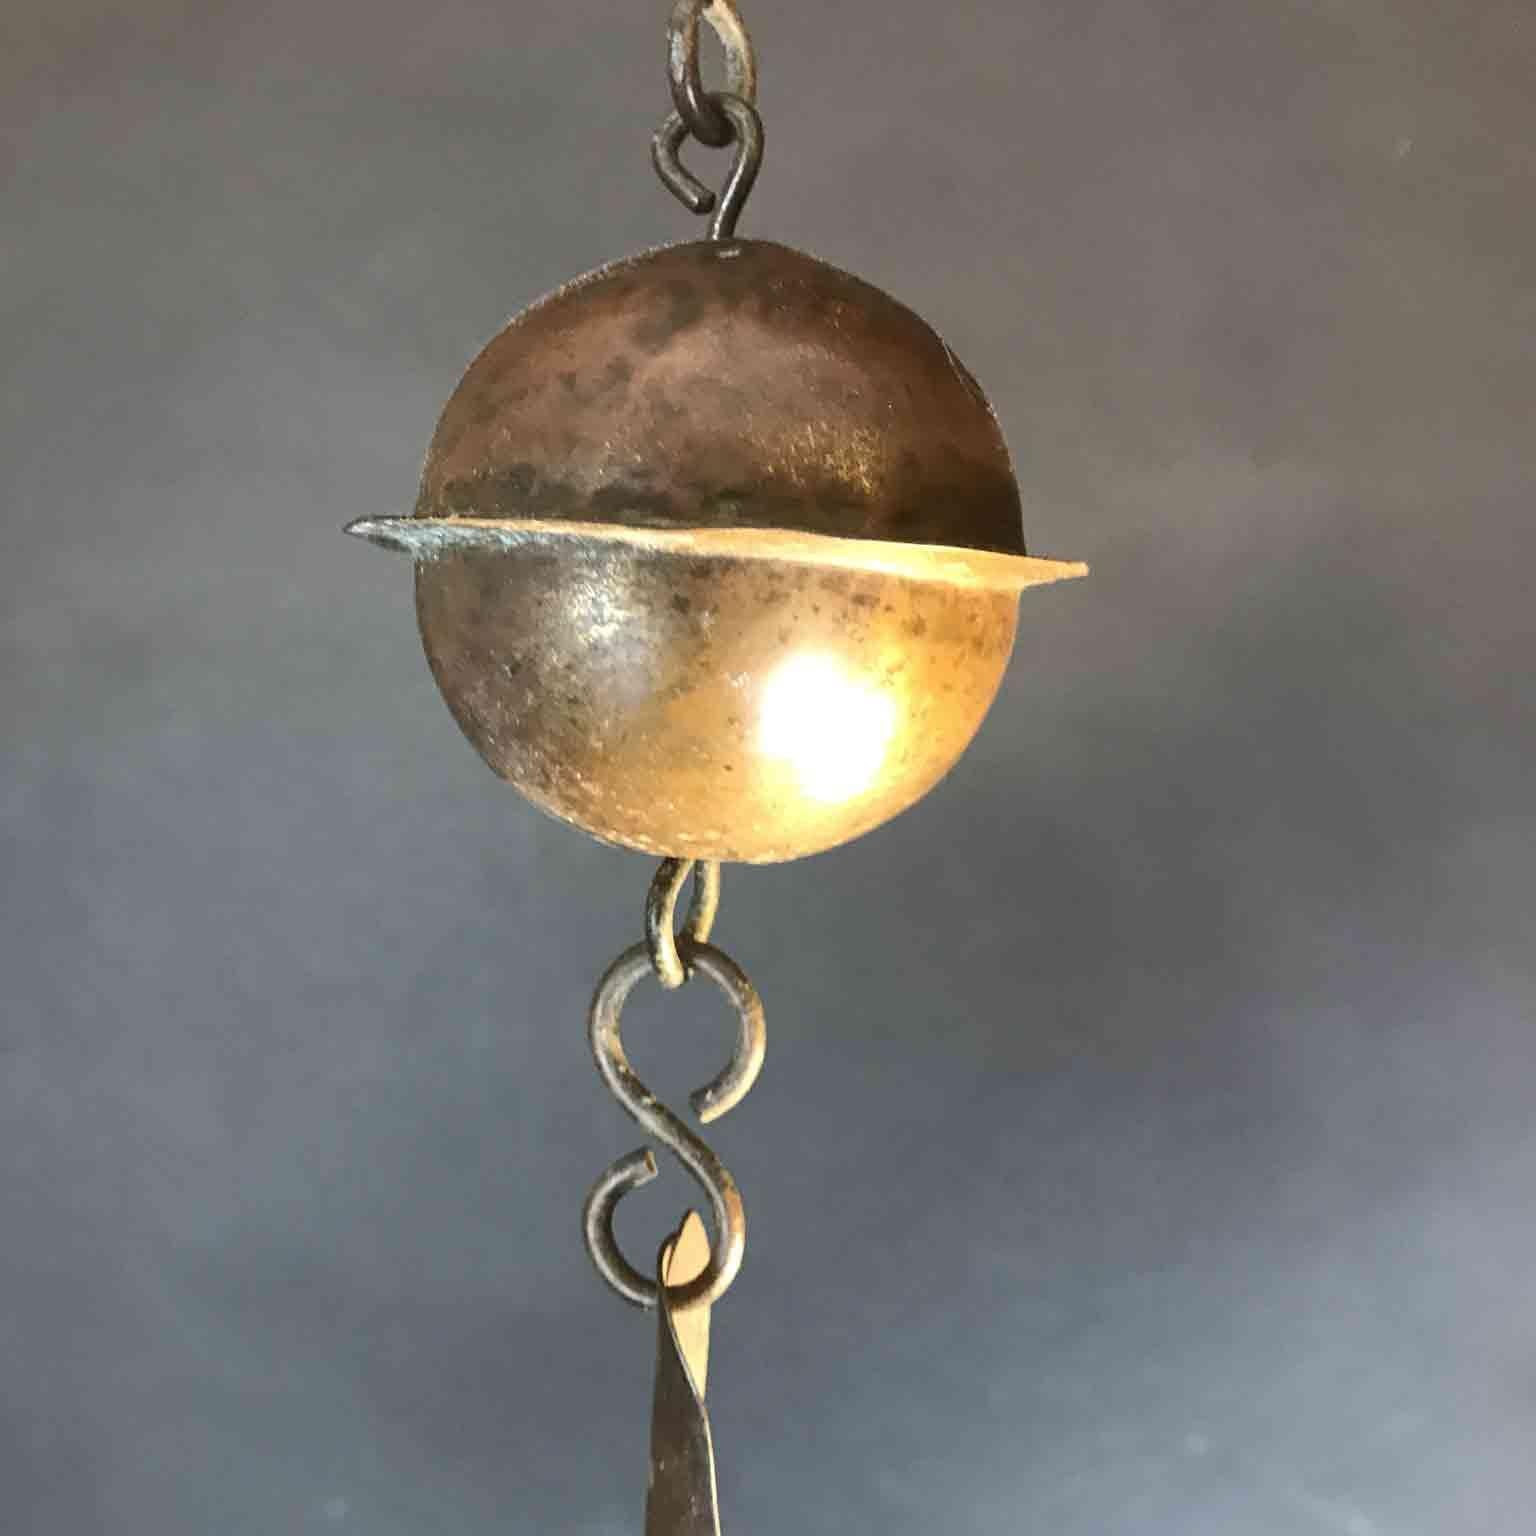 Lampada Liturgica Lanterna Italiana Tonda in Rame Sbalzato con Putti 1880 circa (19. Jahrhundert) im Angebot